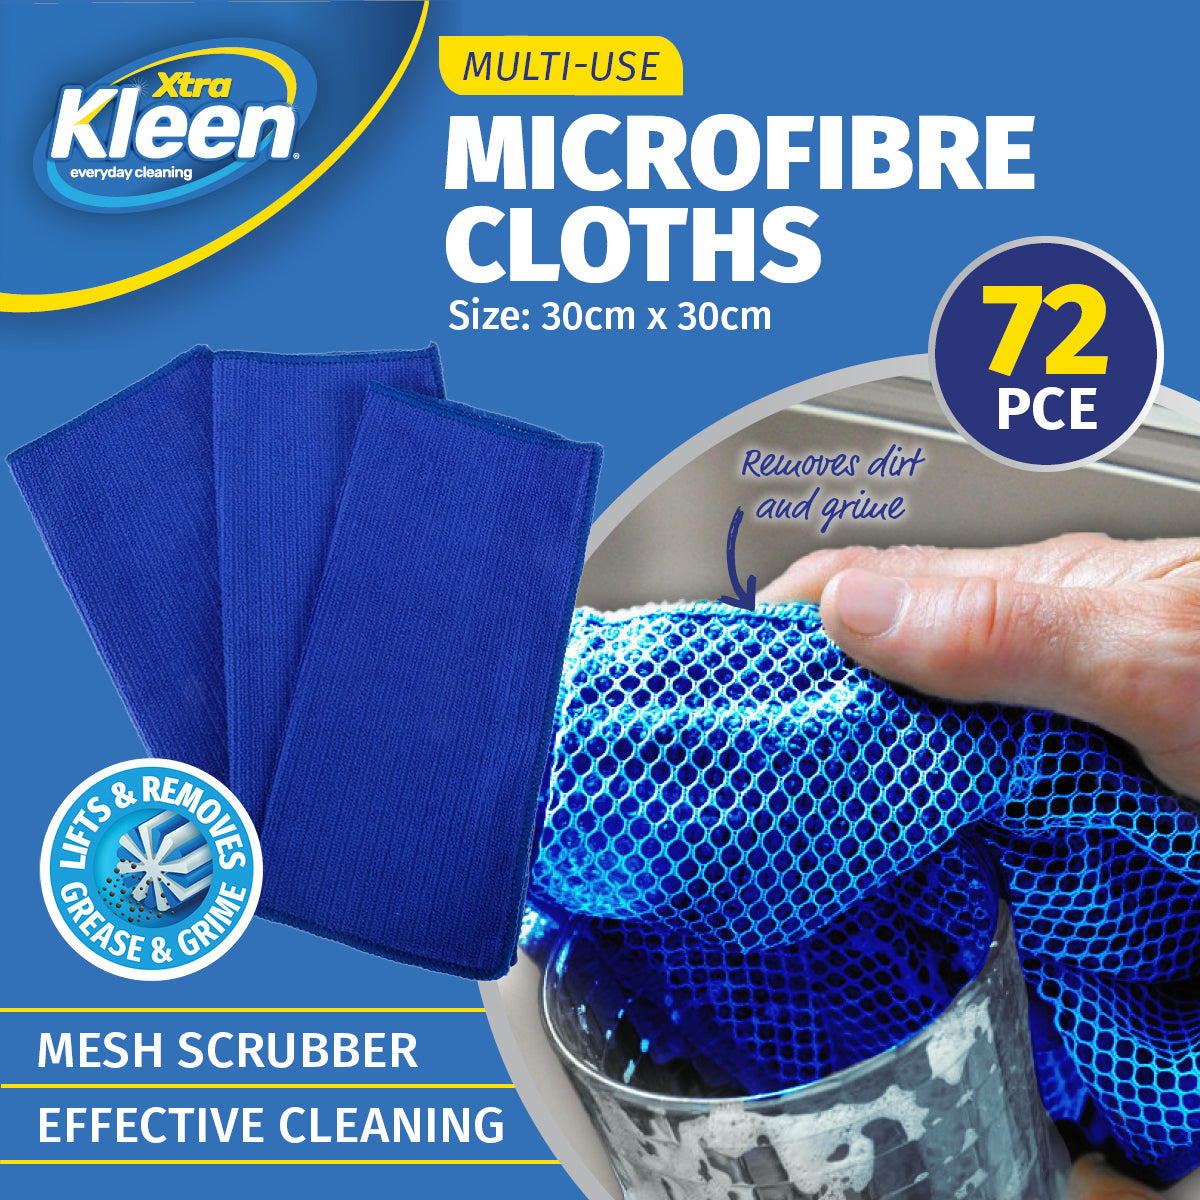 Xtra Kleen 72PCE Microfibre Cloths Built-In Mesh Scrubber Absorbent 30cm